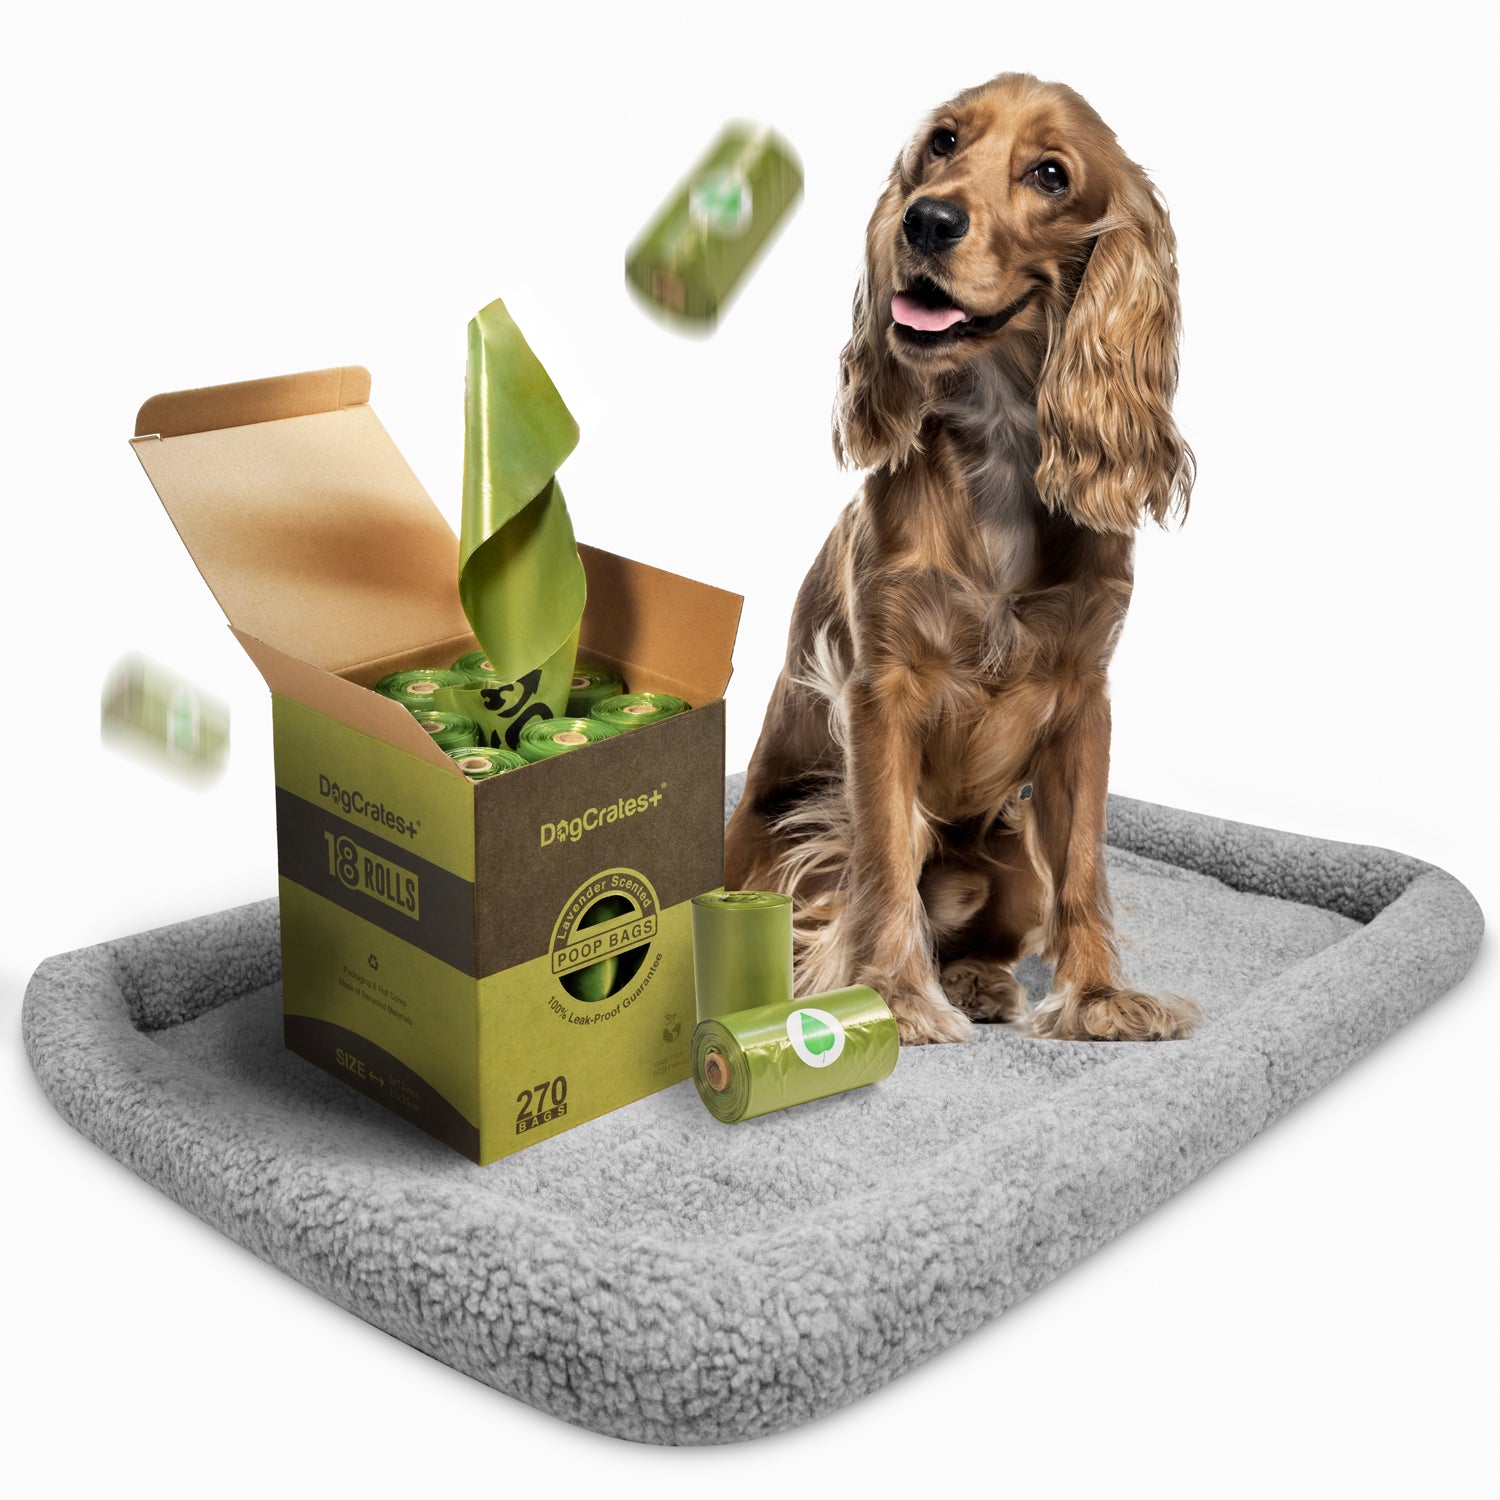 270 Biodegradable Dog Poop Bags and Large Grey Machine Washable Dog Bed BUNDLE